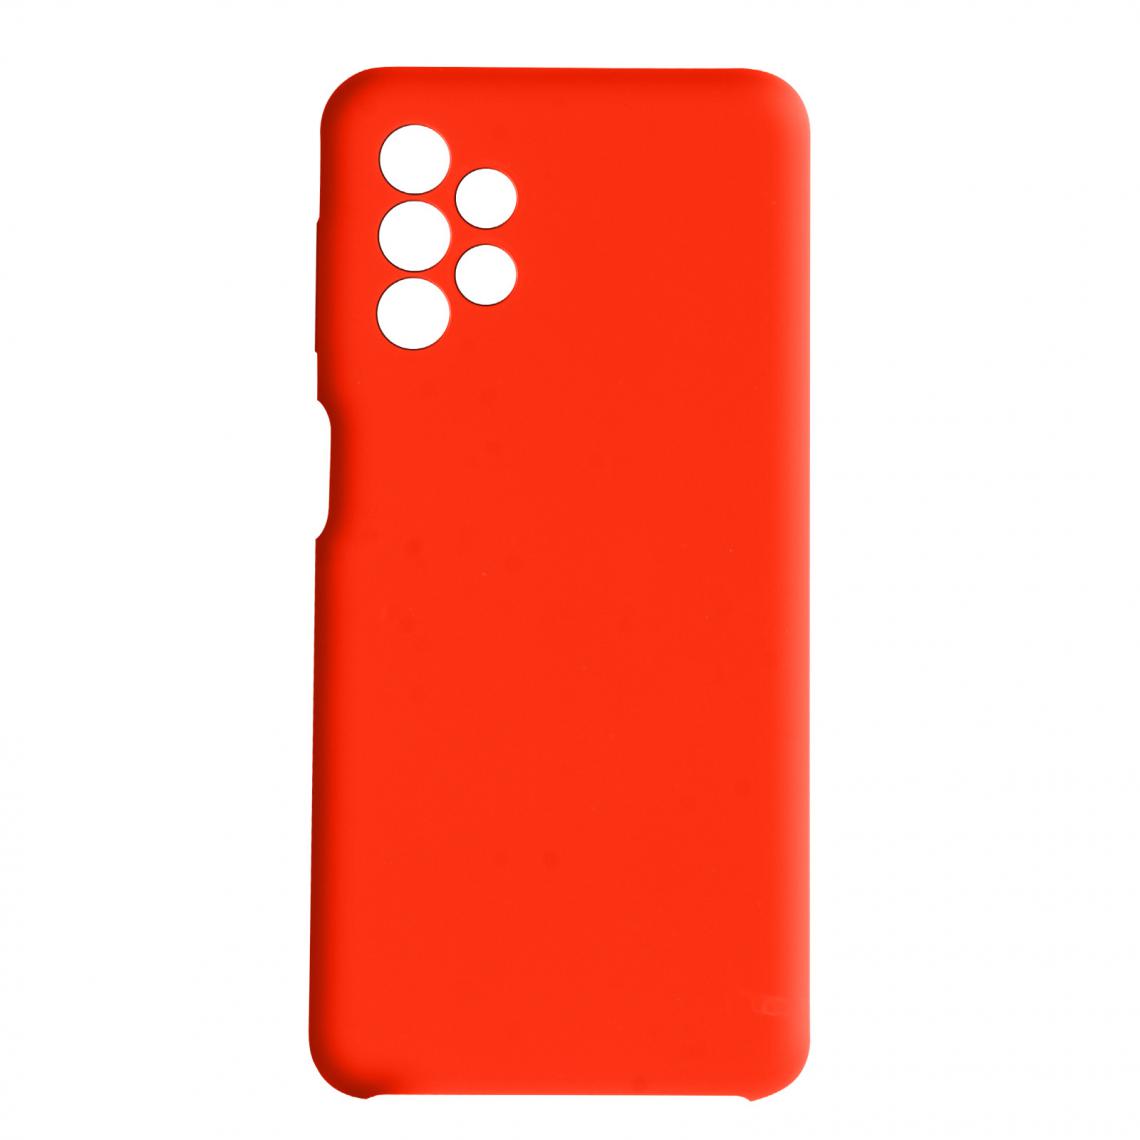 Avizar - Coque Samsung A32 5G Silicone Semi-rigide Soft-touch Collection Venus rouge - Coque, étui smartphone